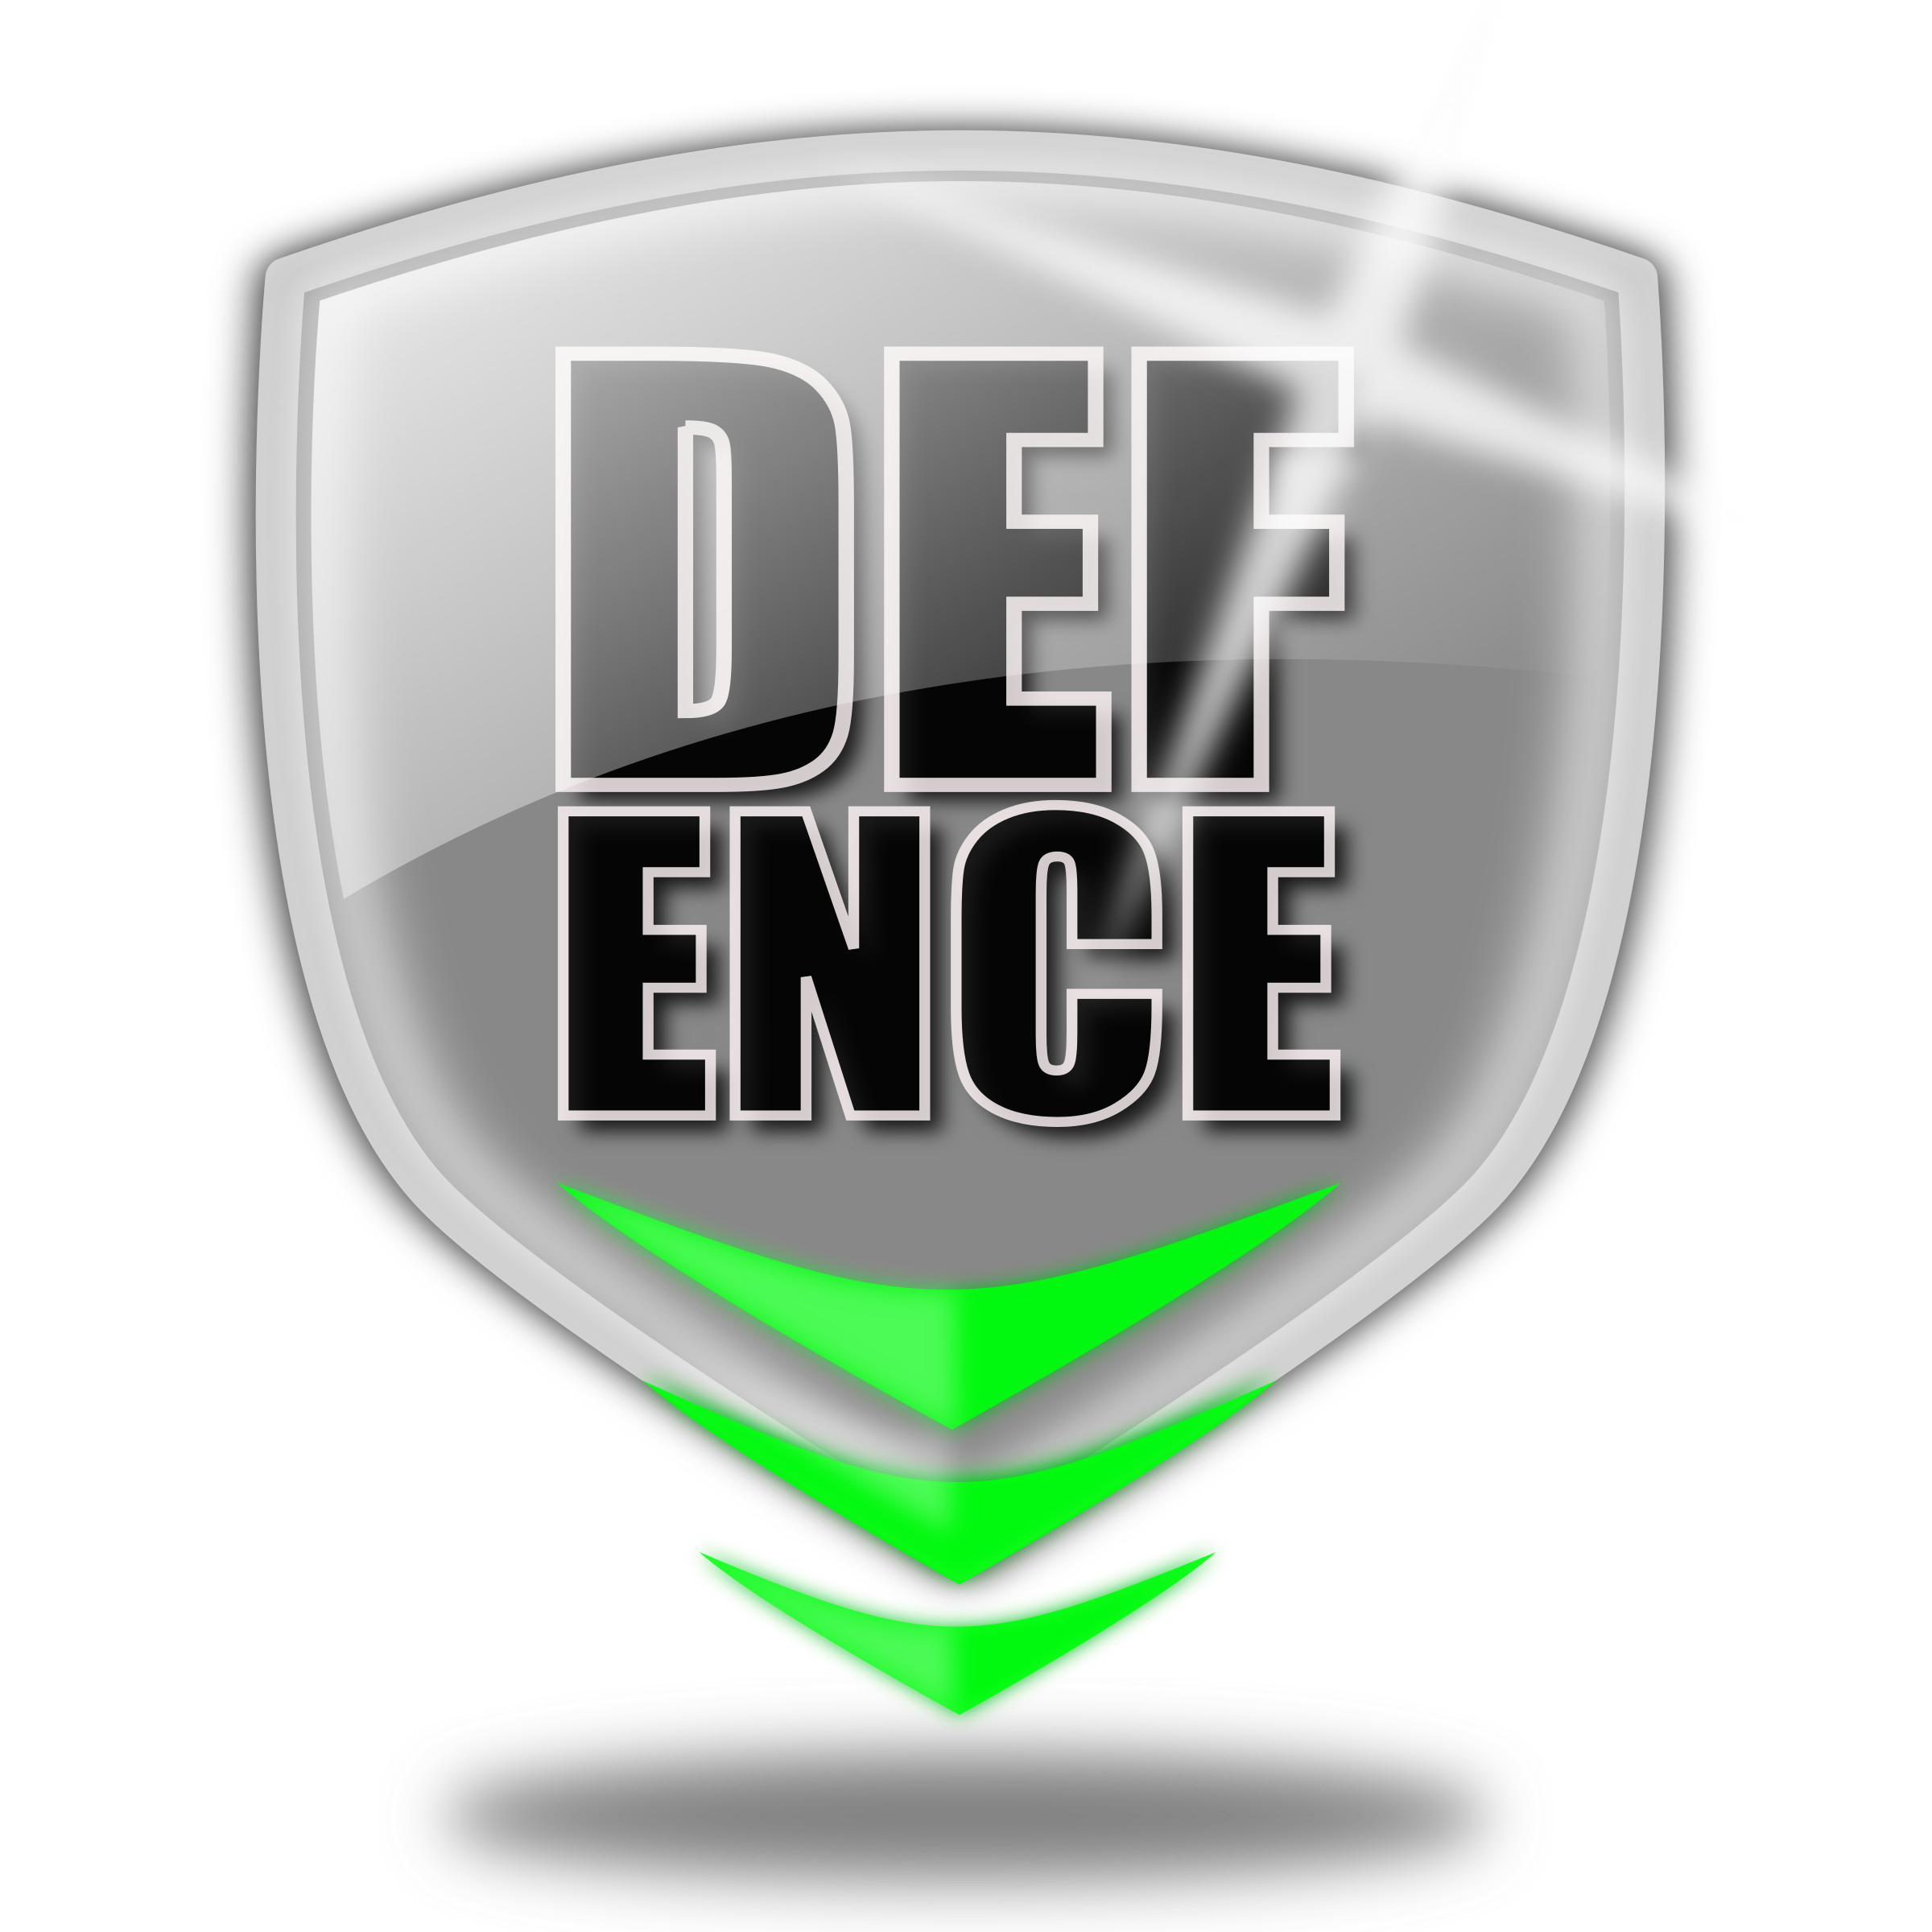 Defence logo shield SVG Clip arts